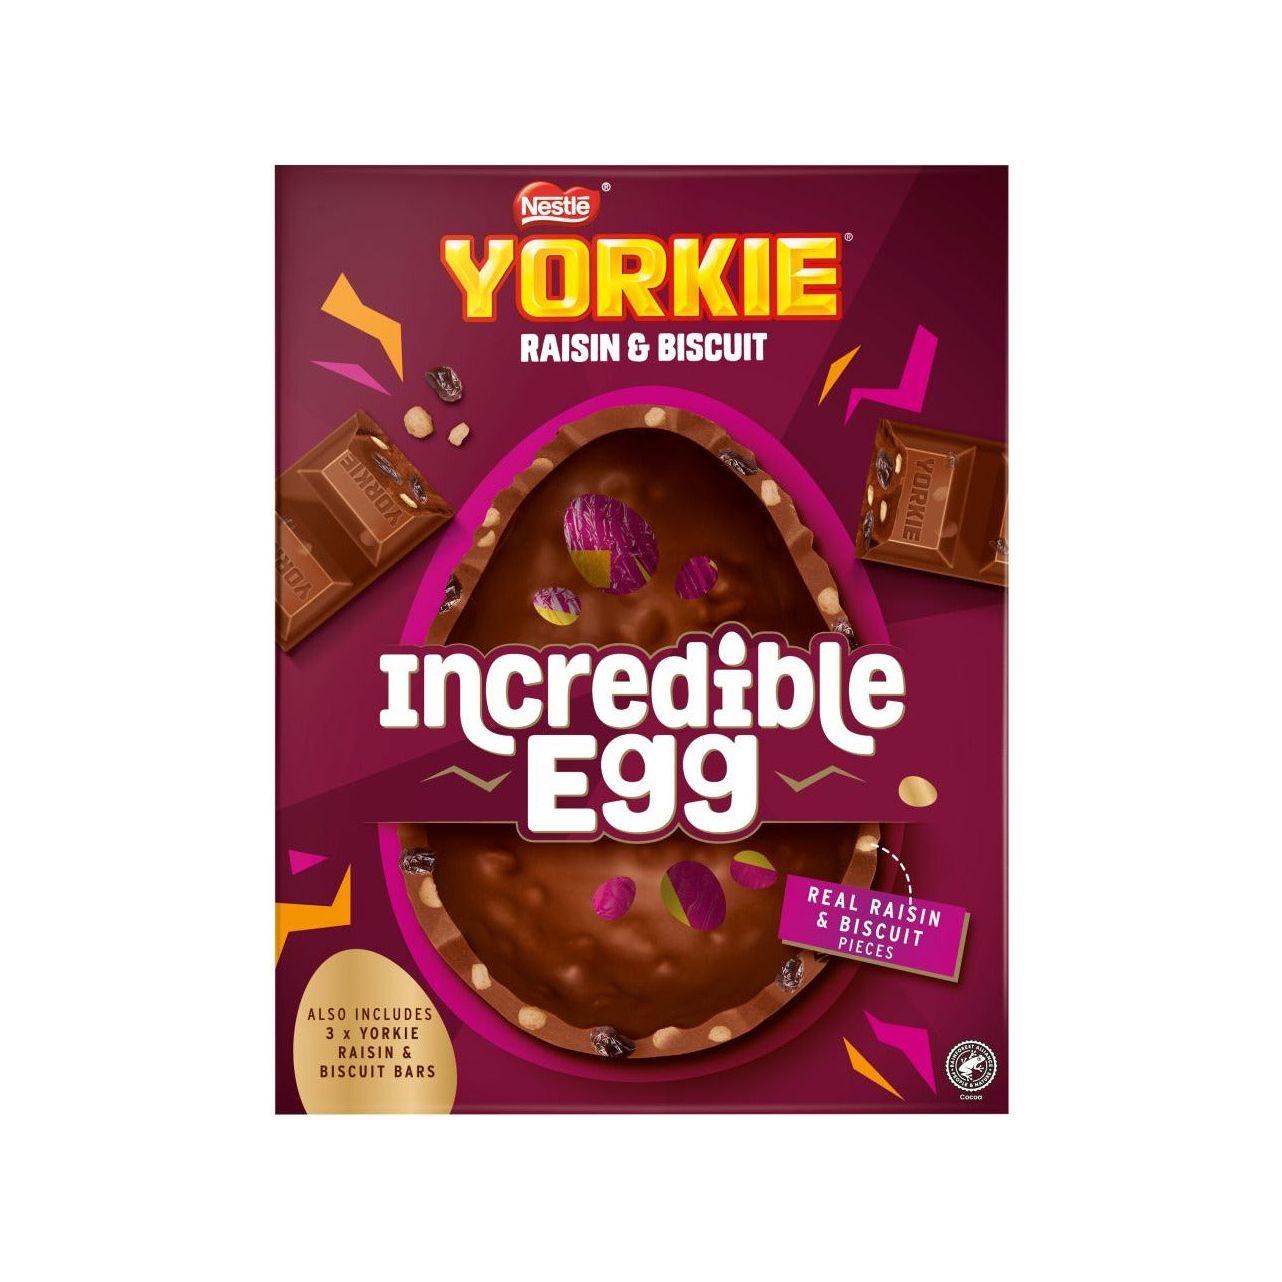 Yorkie Raisin & Biscuit Incredible Egg 522g